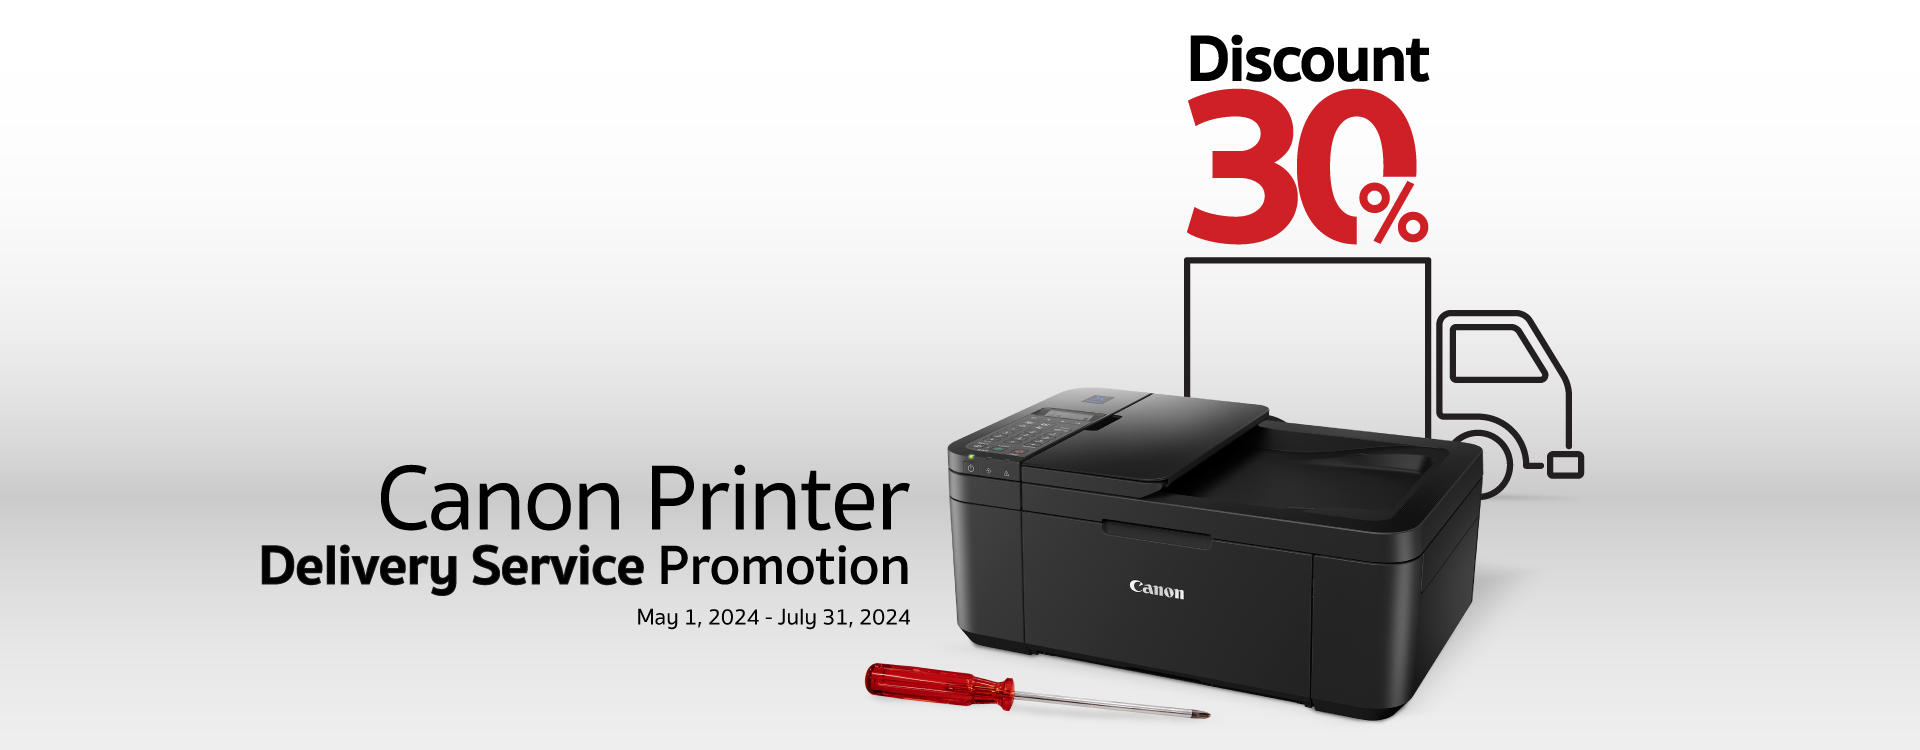 Printer-Repair-Delivery-Service-Promotion_EN.jpg